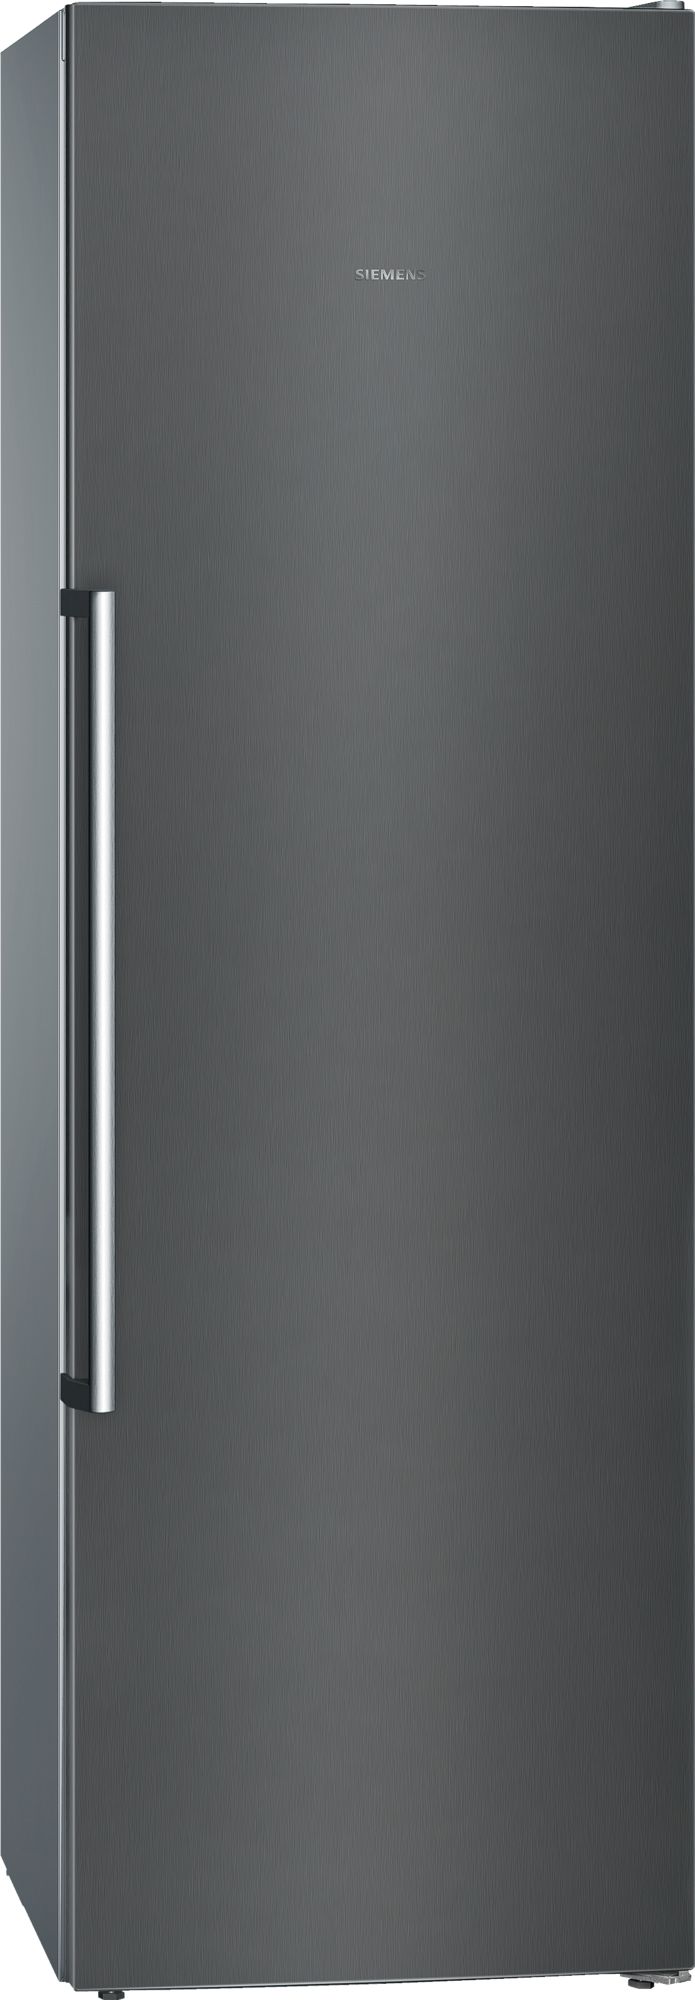 Siemens iQ500 GS36NAXEP congelador/arca frigorífica De pé Indepen